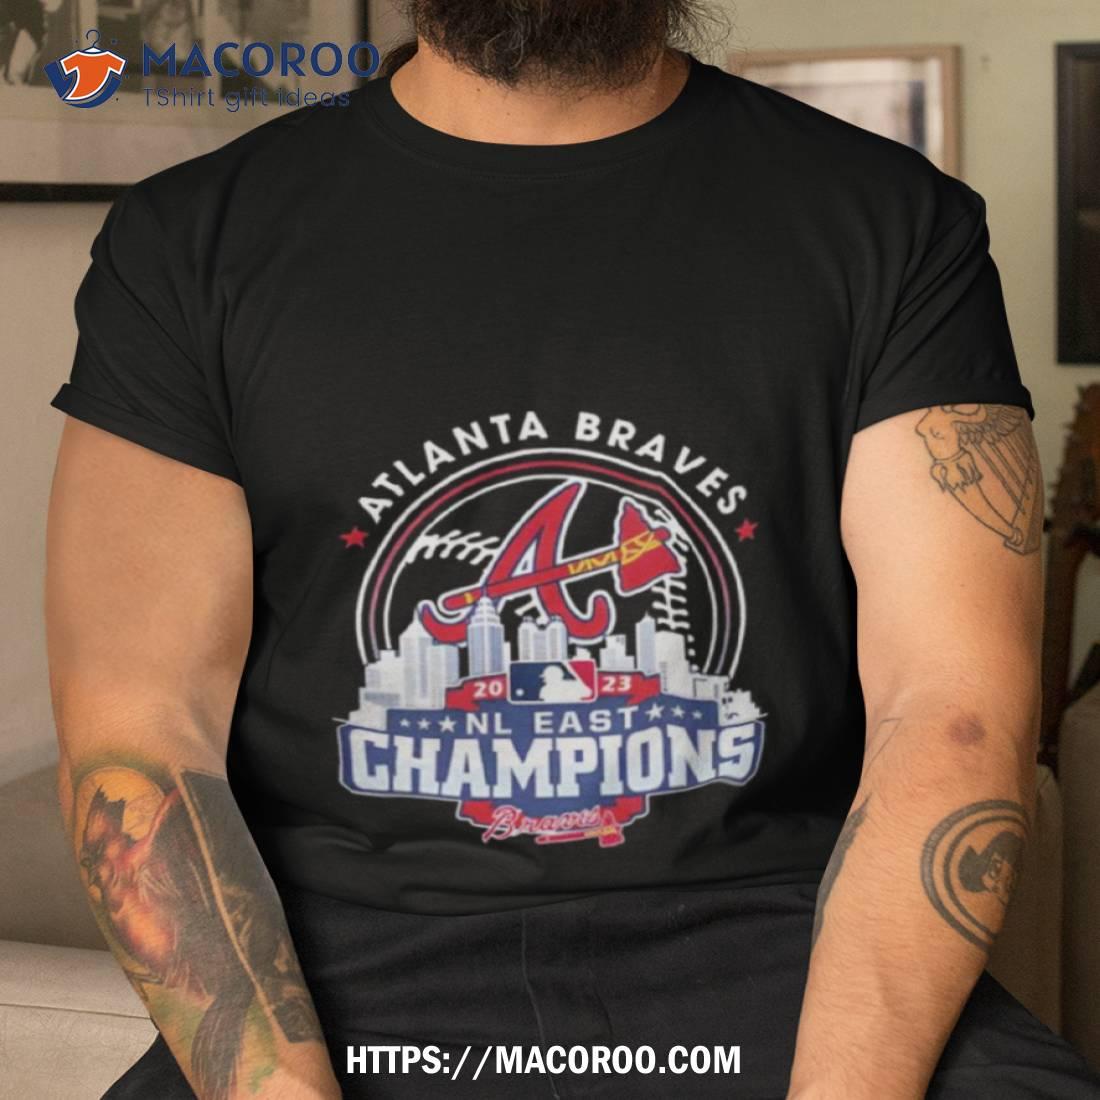 Atlanta Braves Majestic MLB Jersey - XL Grey Polyester